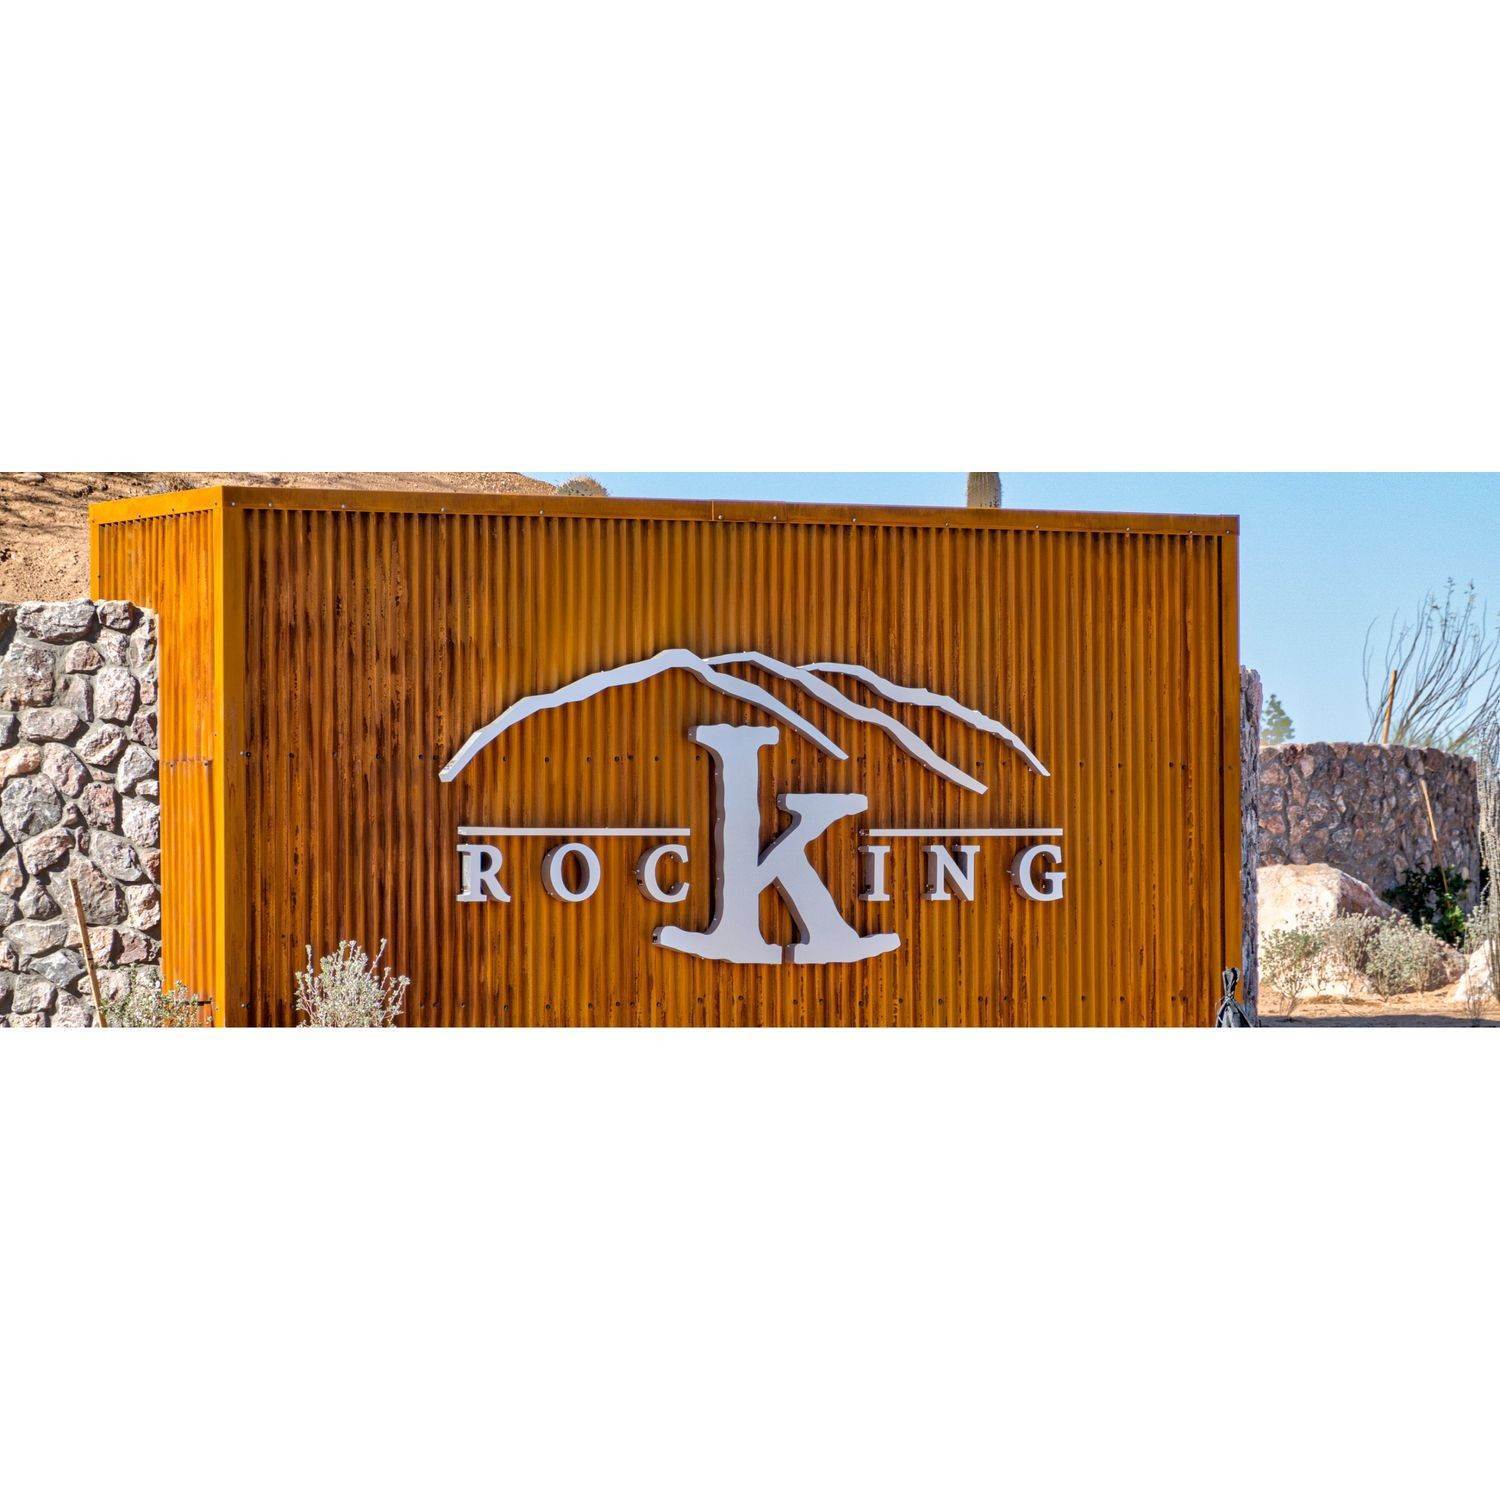 6. Rocking K - Silver Ridge building at Old Spanish Trl And Rocking K Ranch Lp, Tucson, AZ 85747